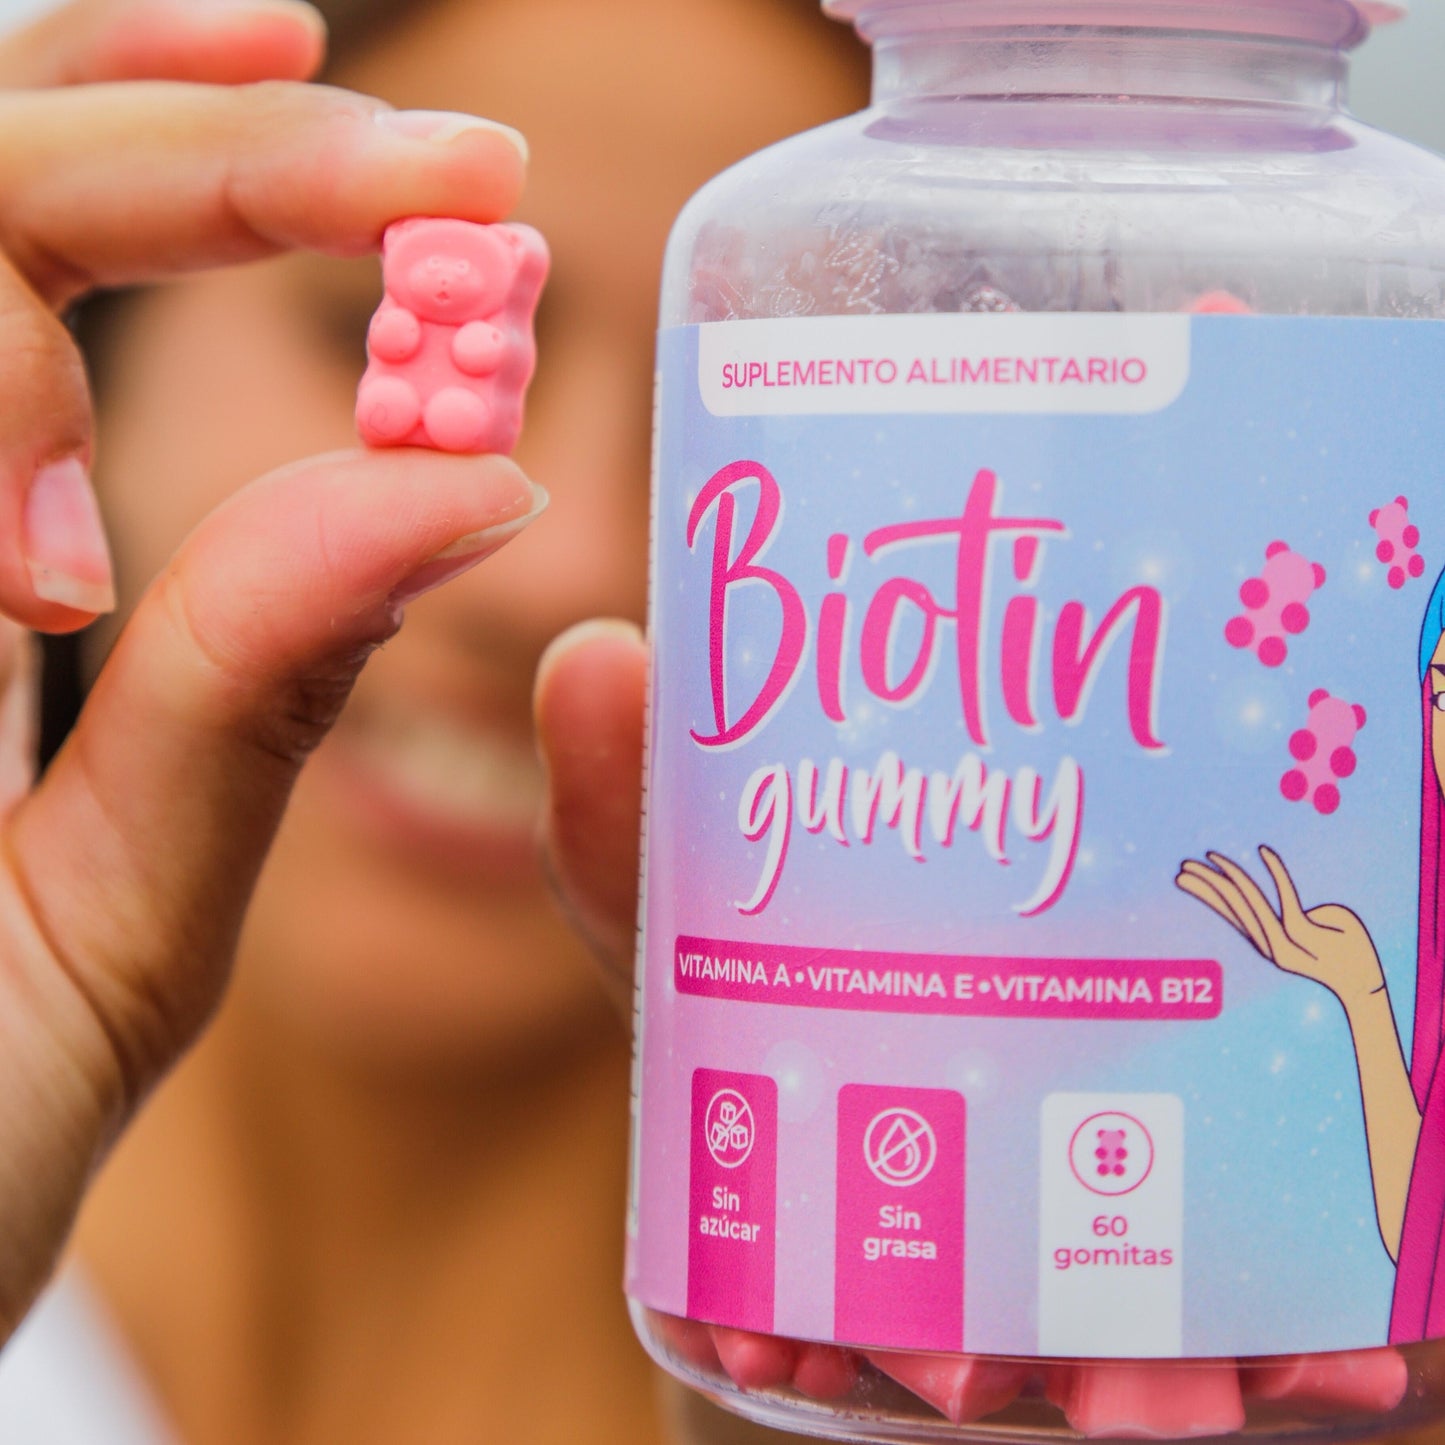 biotin gummies